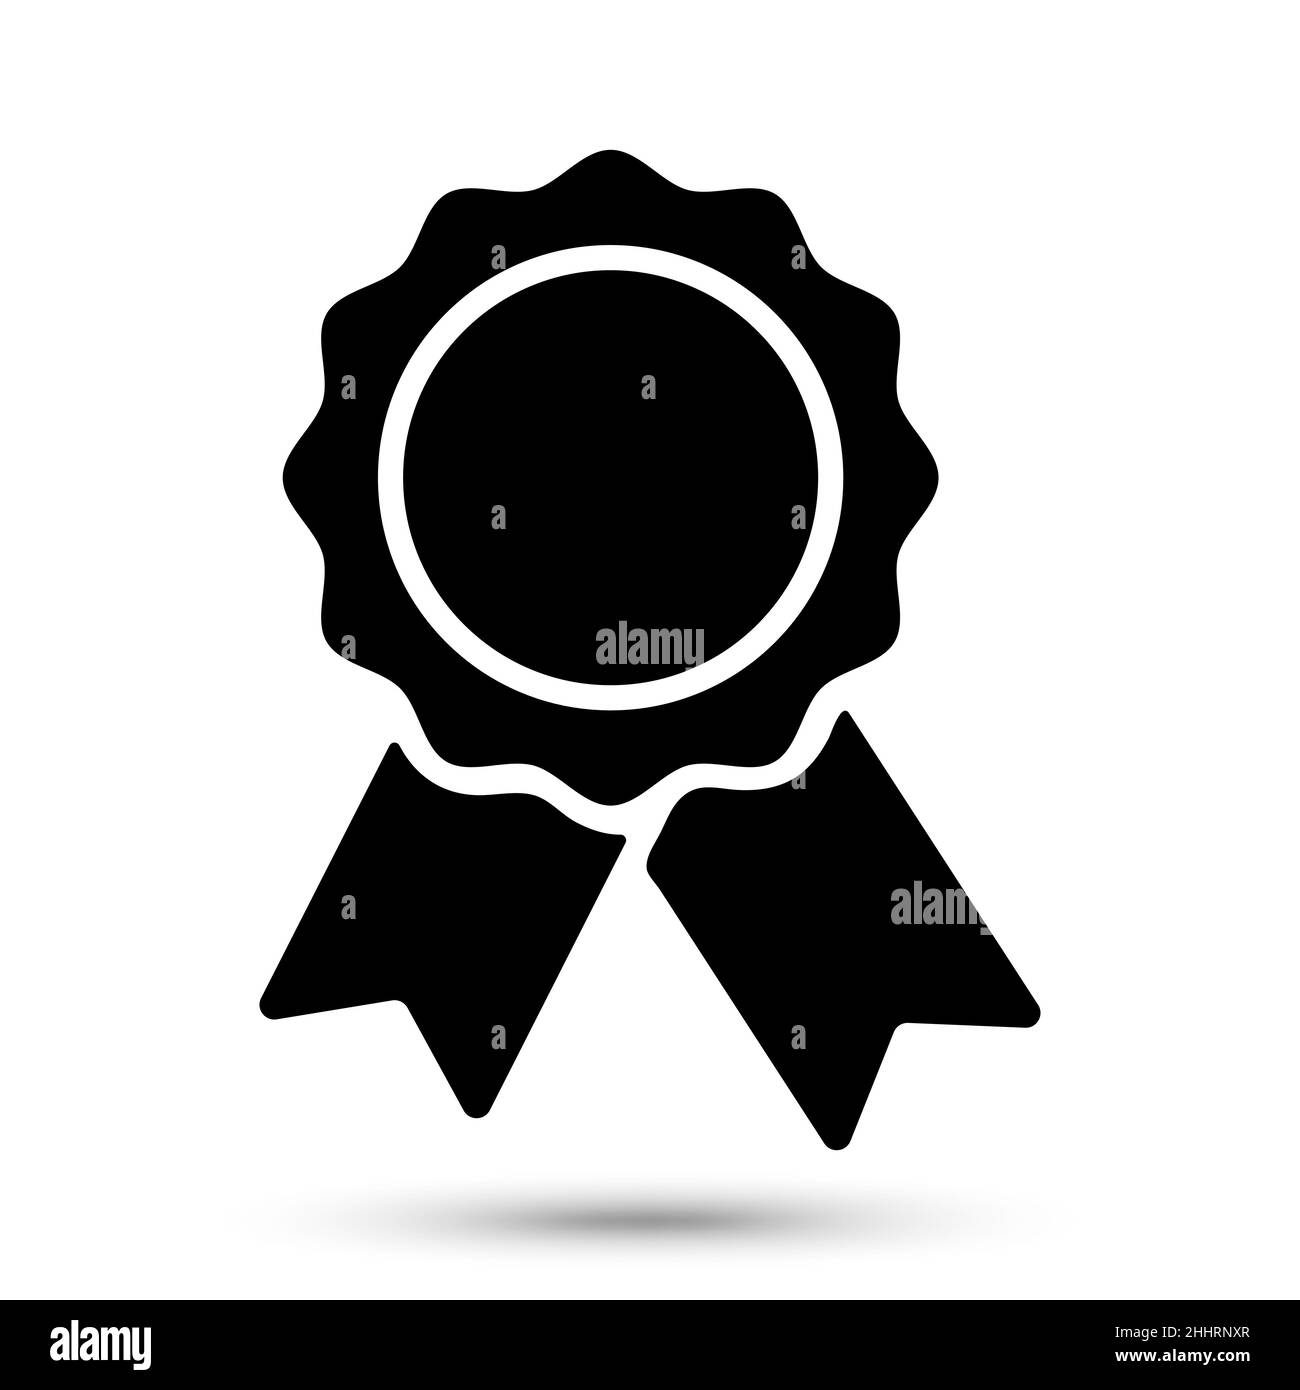 Certificate merit emblem ribbon Black and White Stock Photos & Images ...